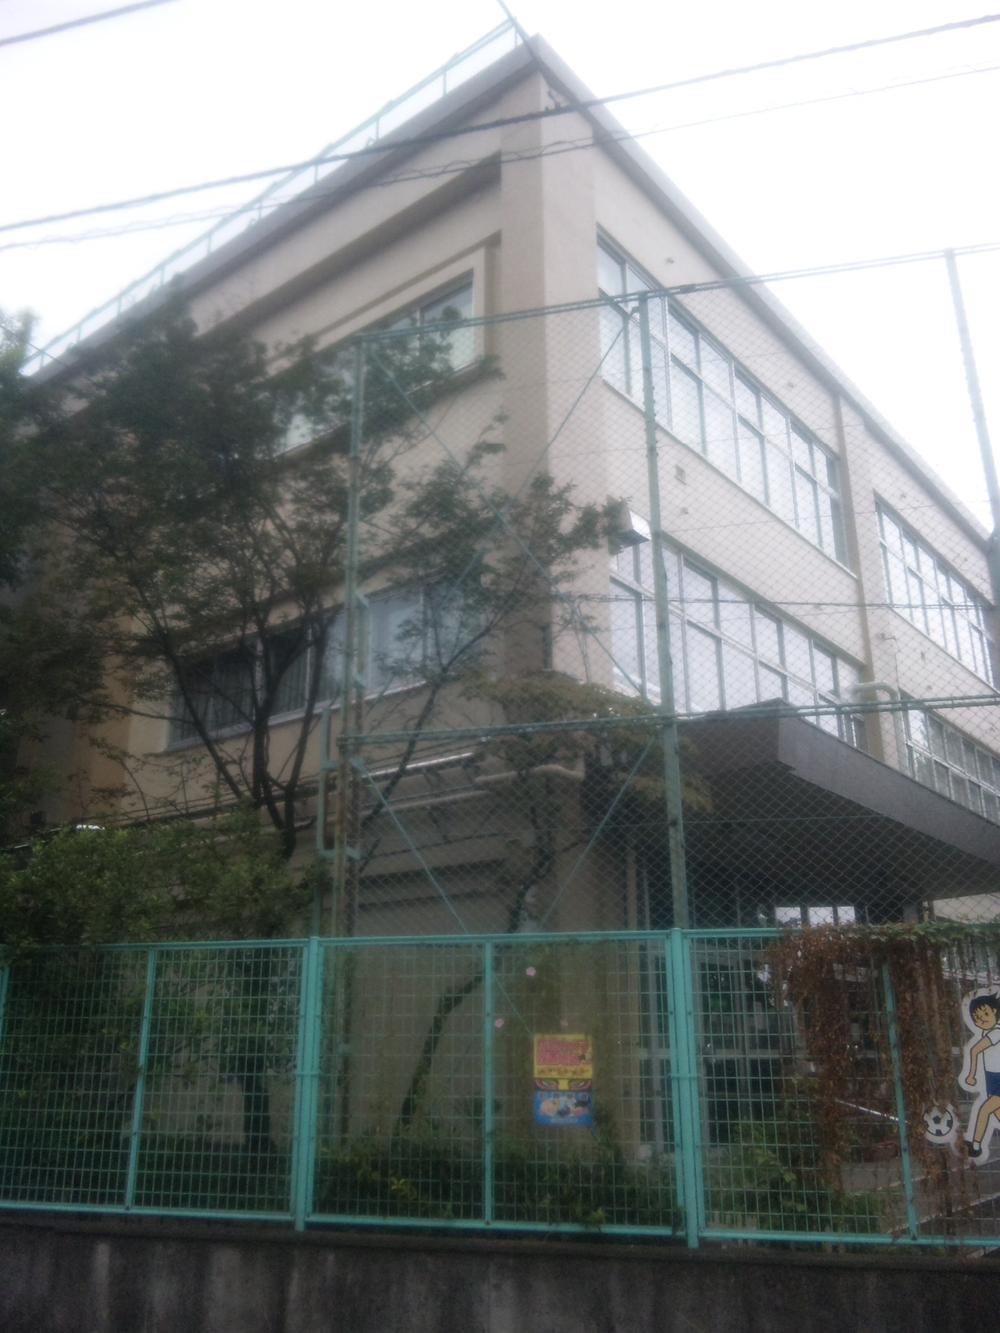 Primary school. 140m to Fujimi hill elementary school